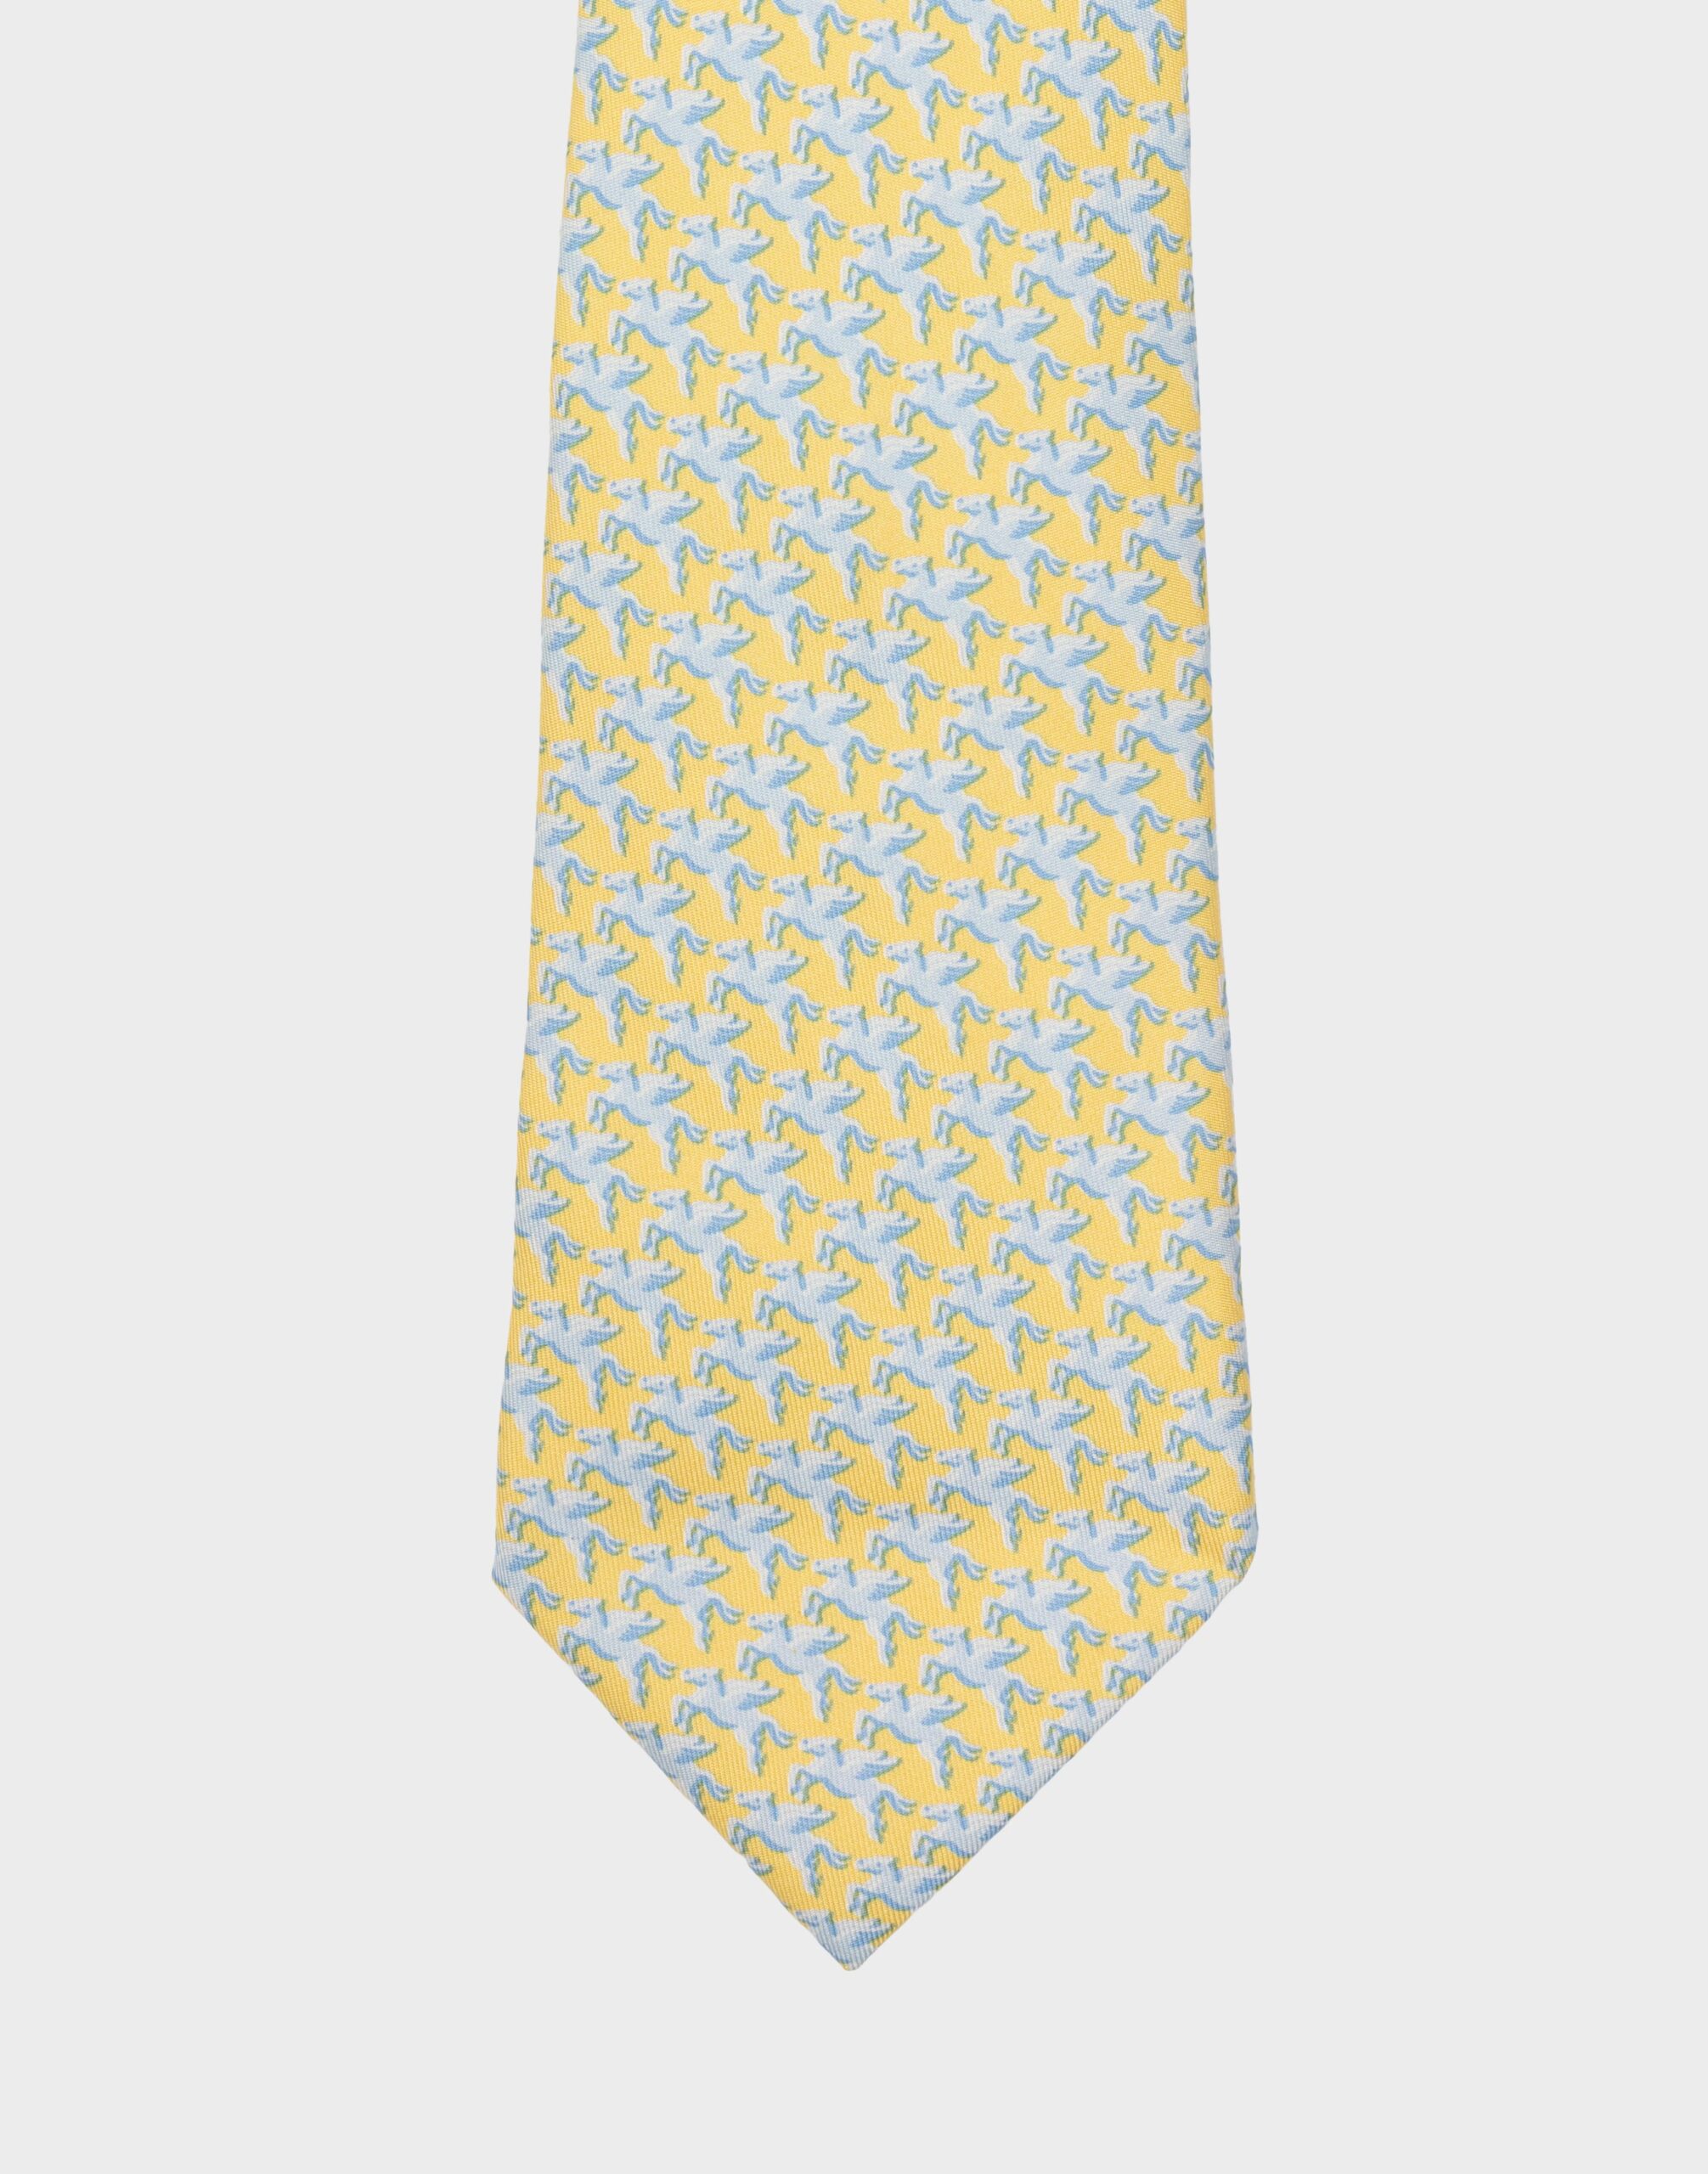 yellow men's silk tie with flying pegasus pattern